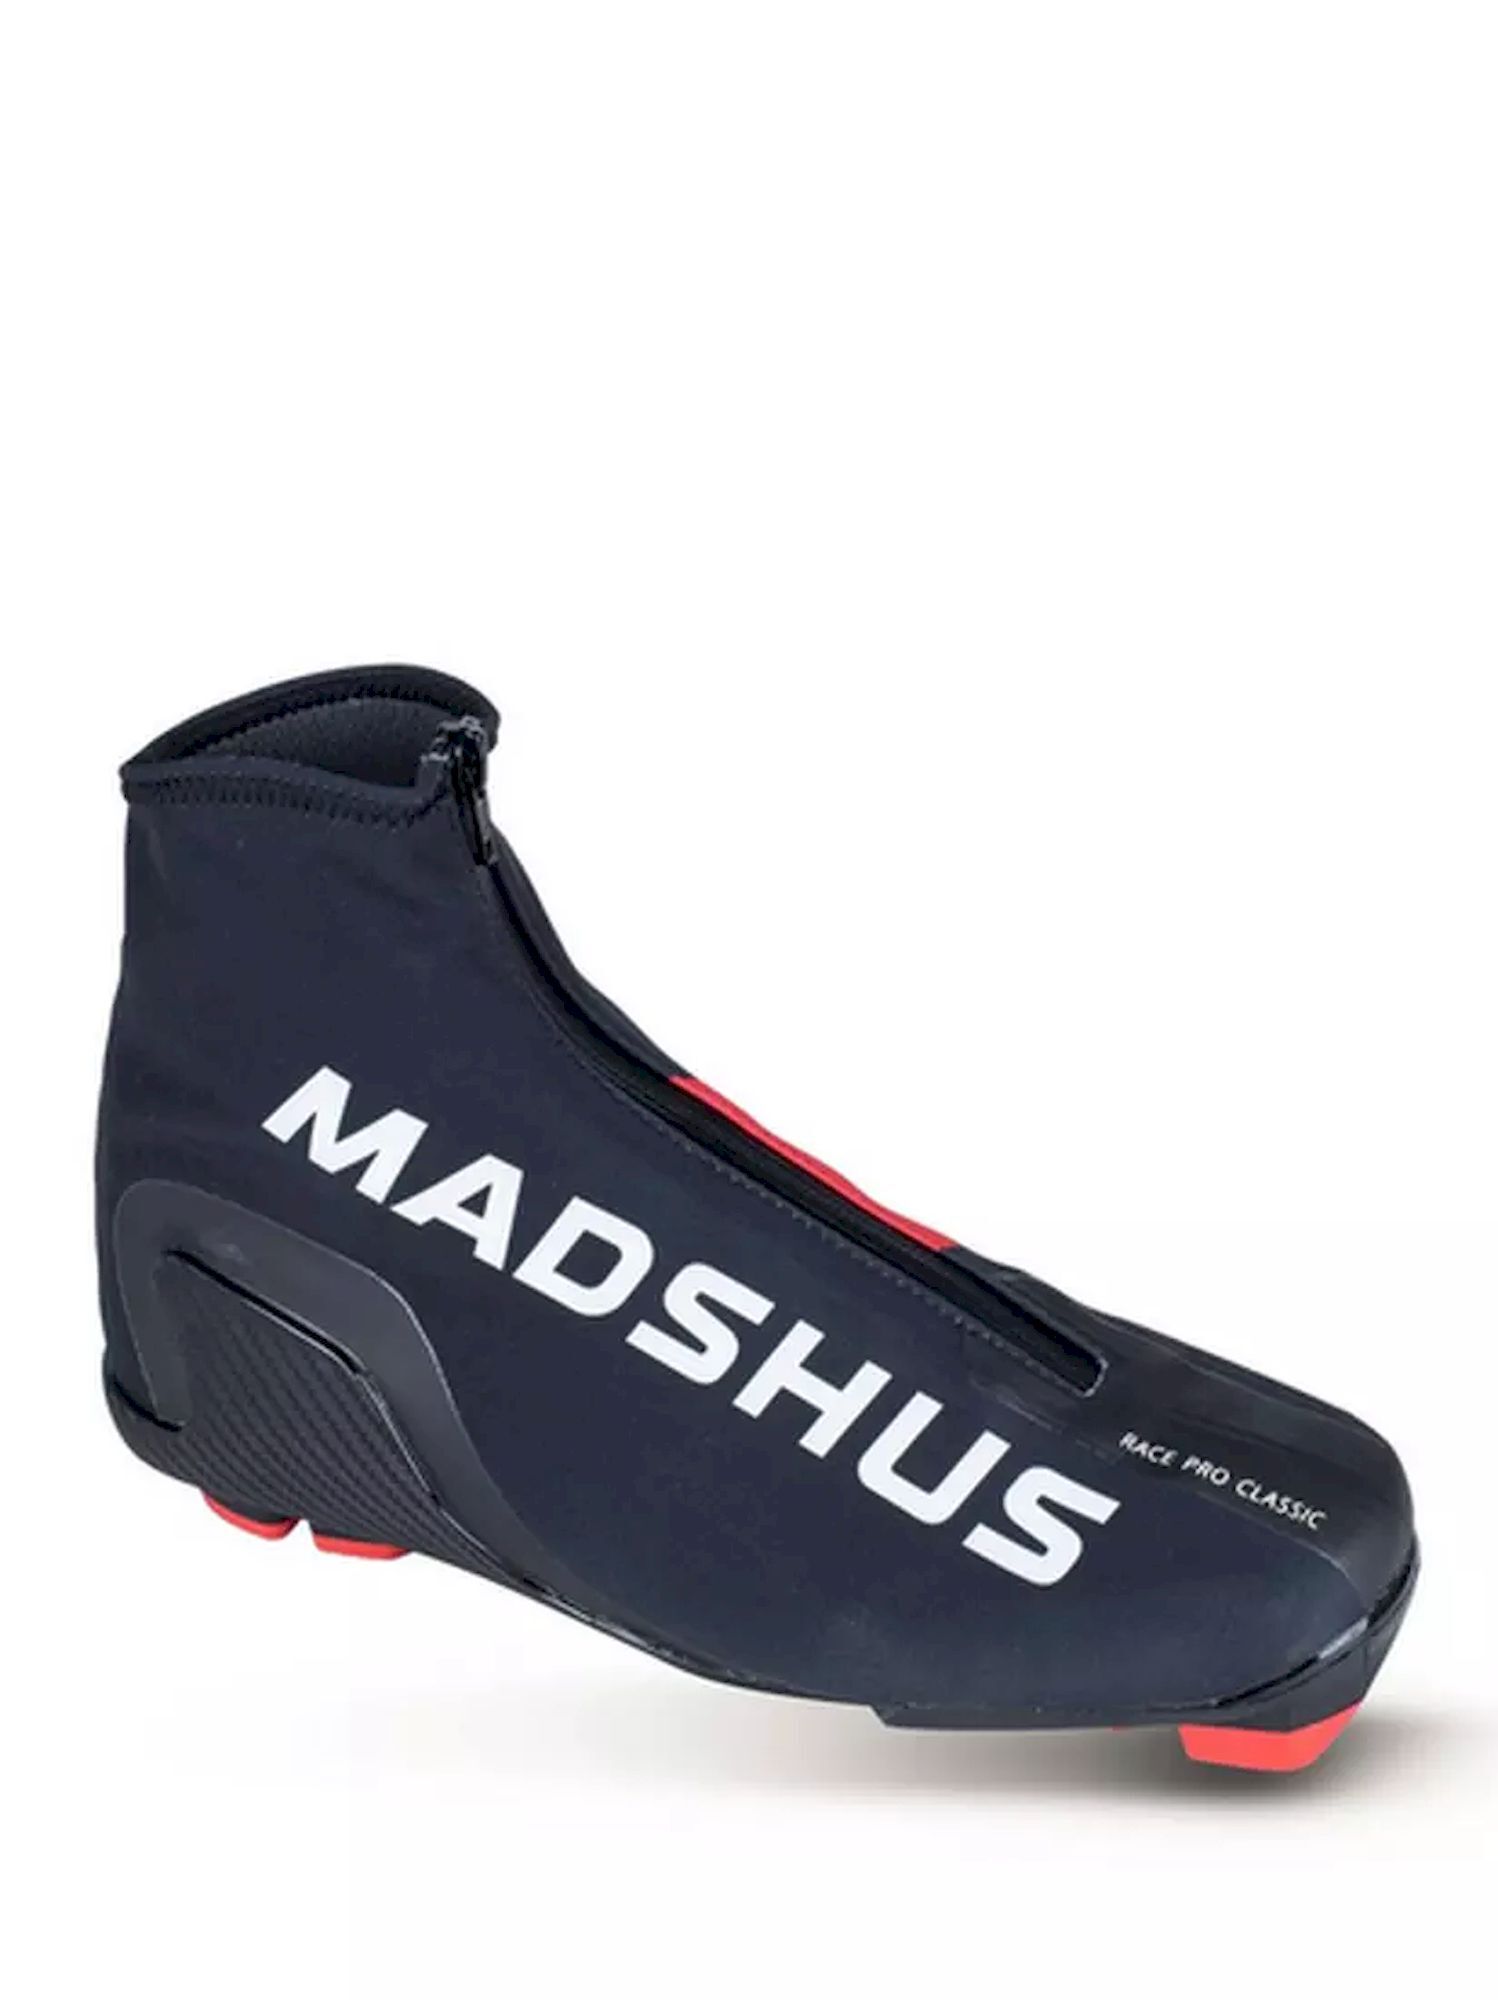 Madshus Race Pro Classic - Scarponi sci di fondo | Hardloop